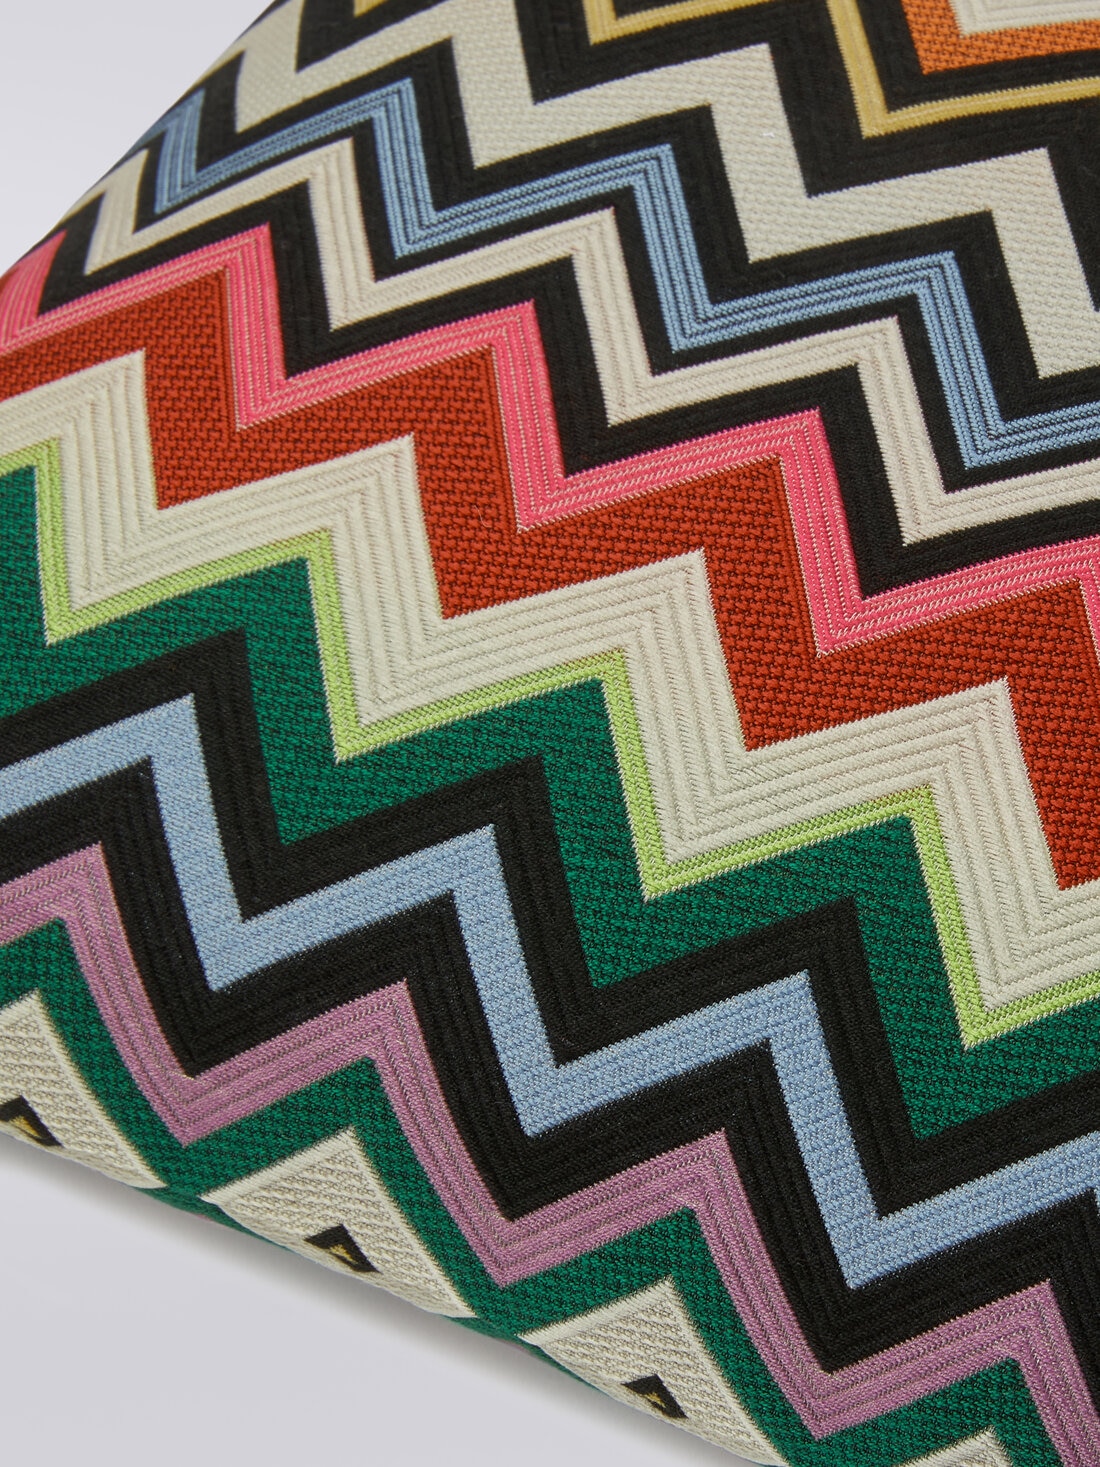 Belfast cushion 30x60 cm, Multicoloured  - 8051275608424 - 2